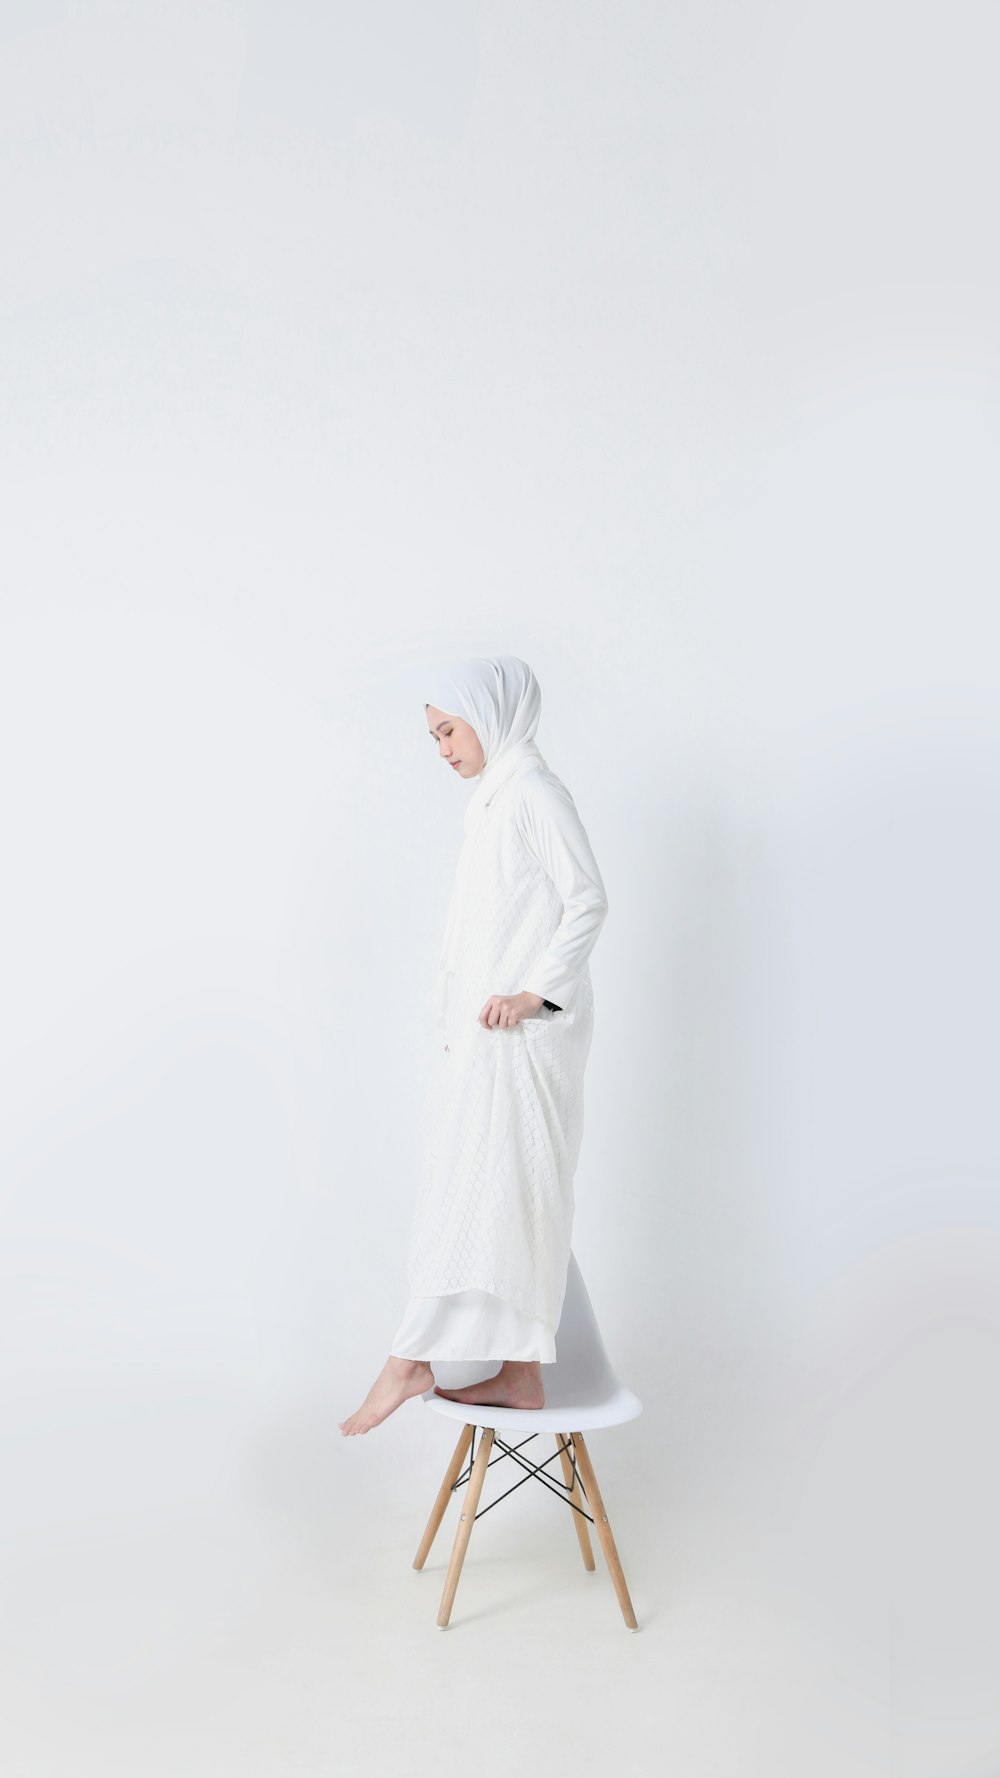 a person in a white robe